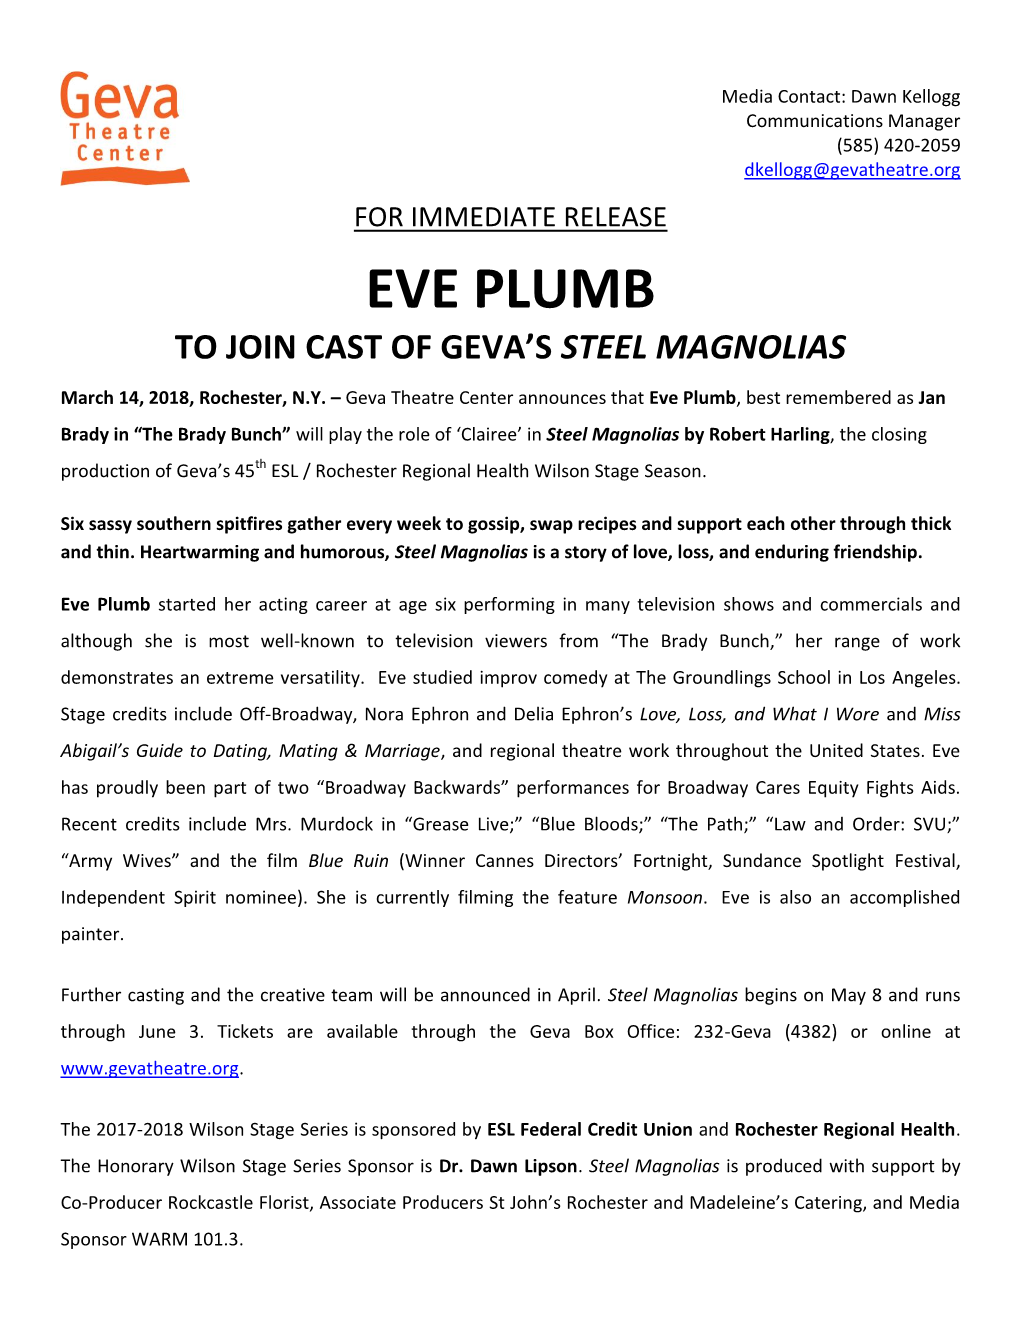 EVE PLUMB Joins Cast of STEEL MAGNOLIAS